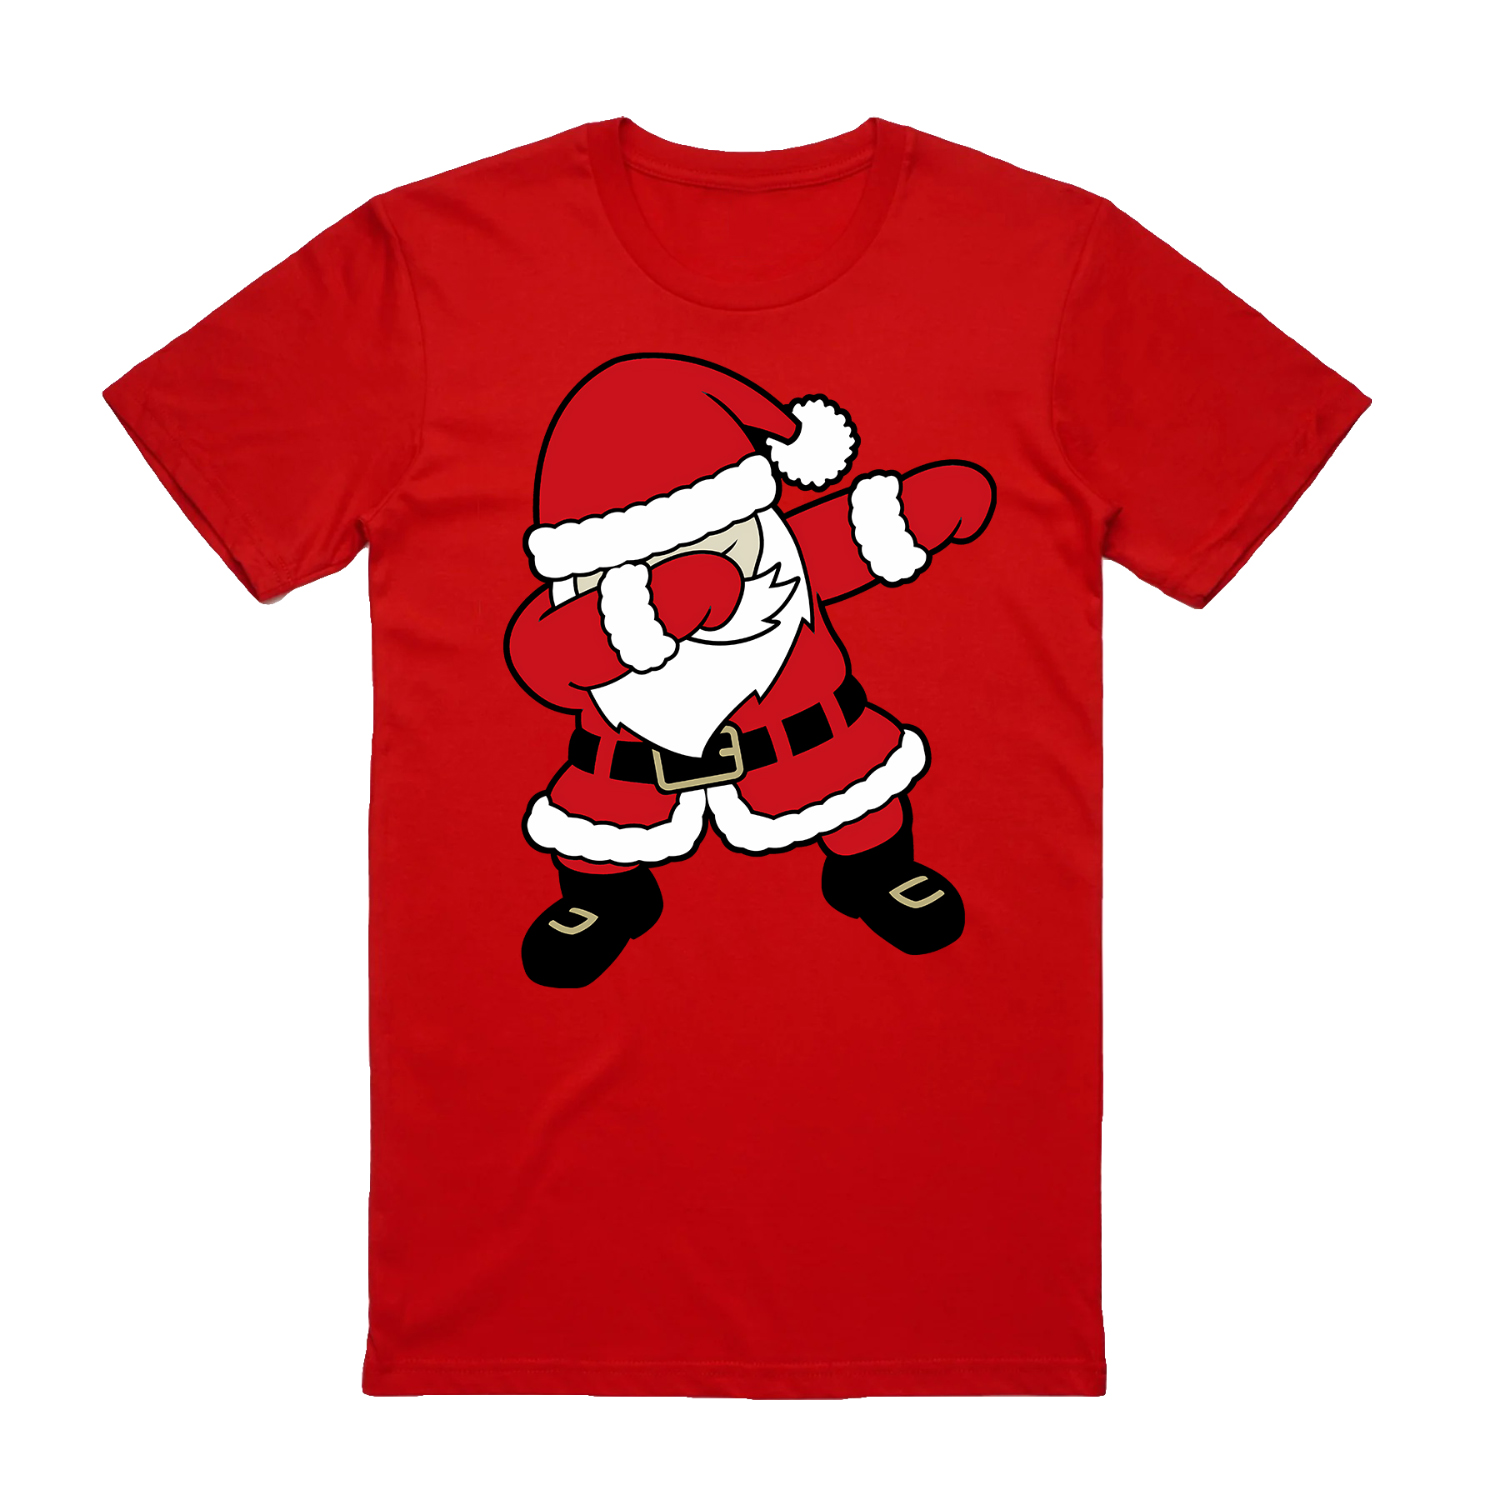 100% Cotton Christmas T-shirt Adult Unisex Tee Tops - Dancing Santa